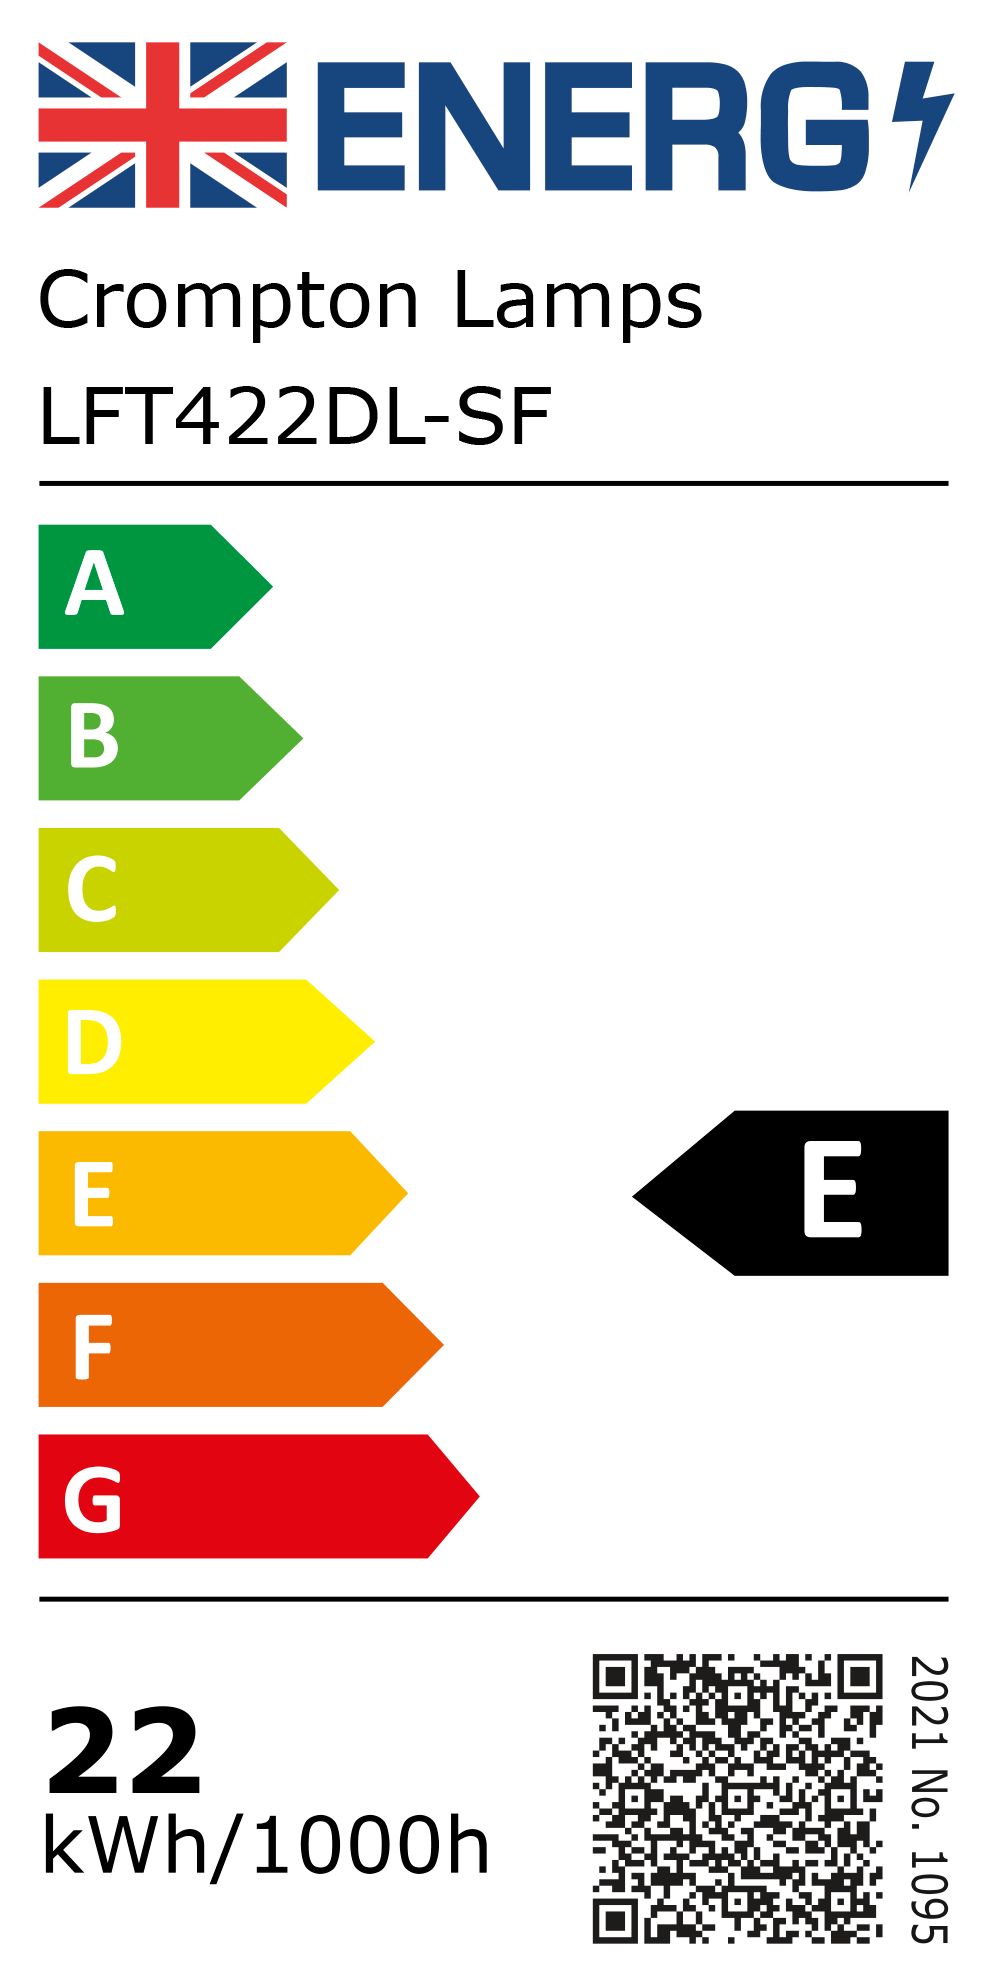 New 2021 Energy Rating Label: MPN LFT422DL-SF